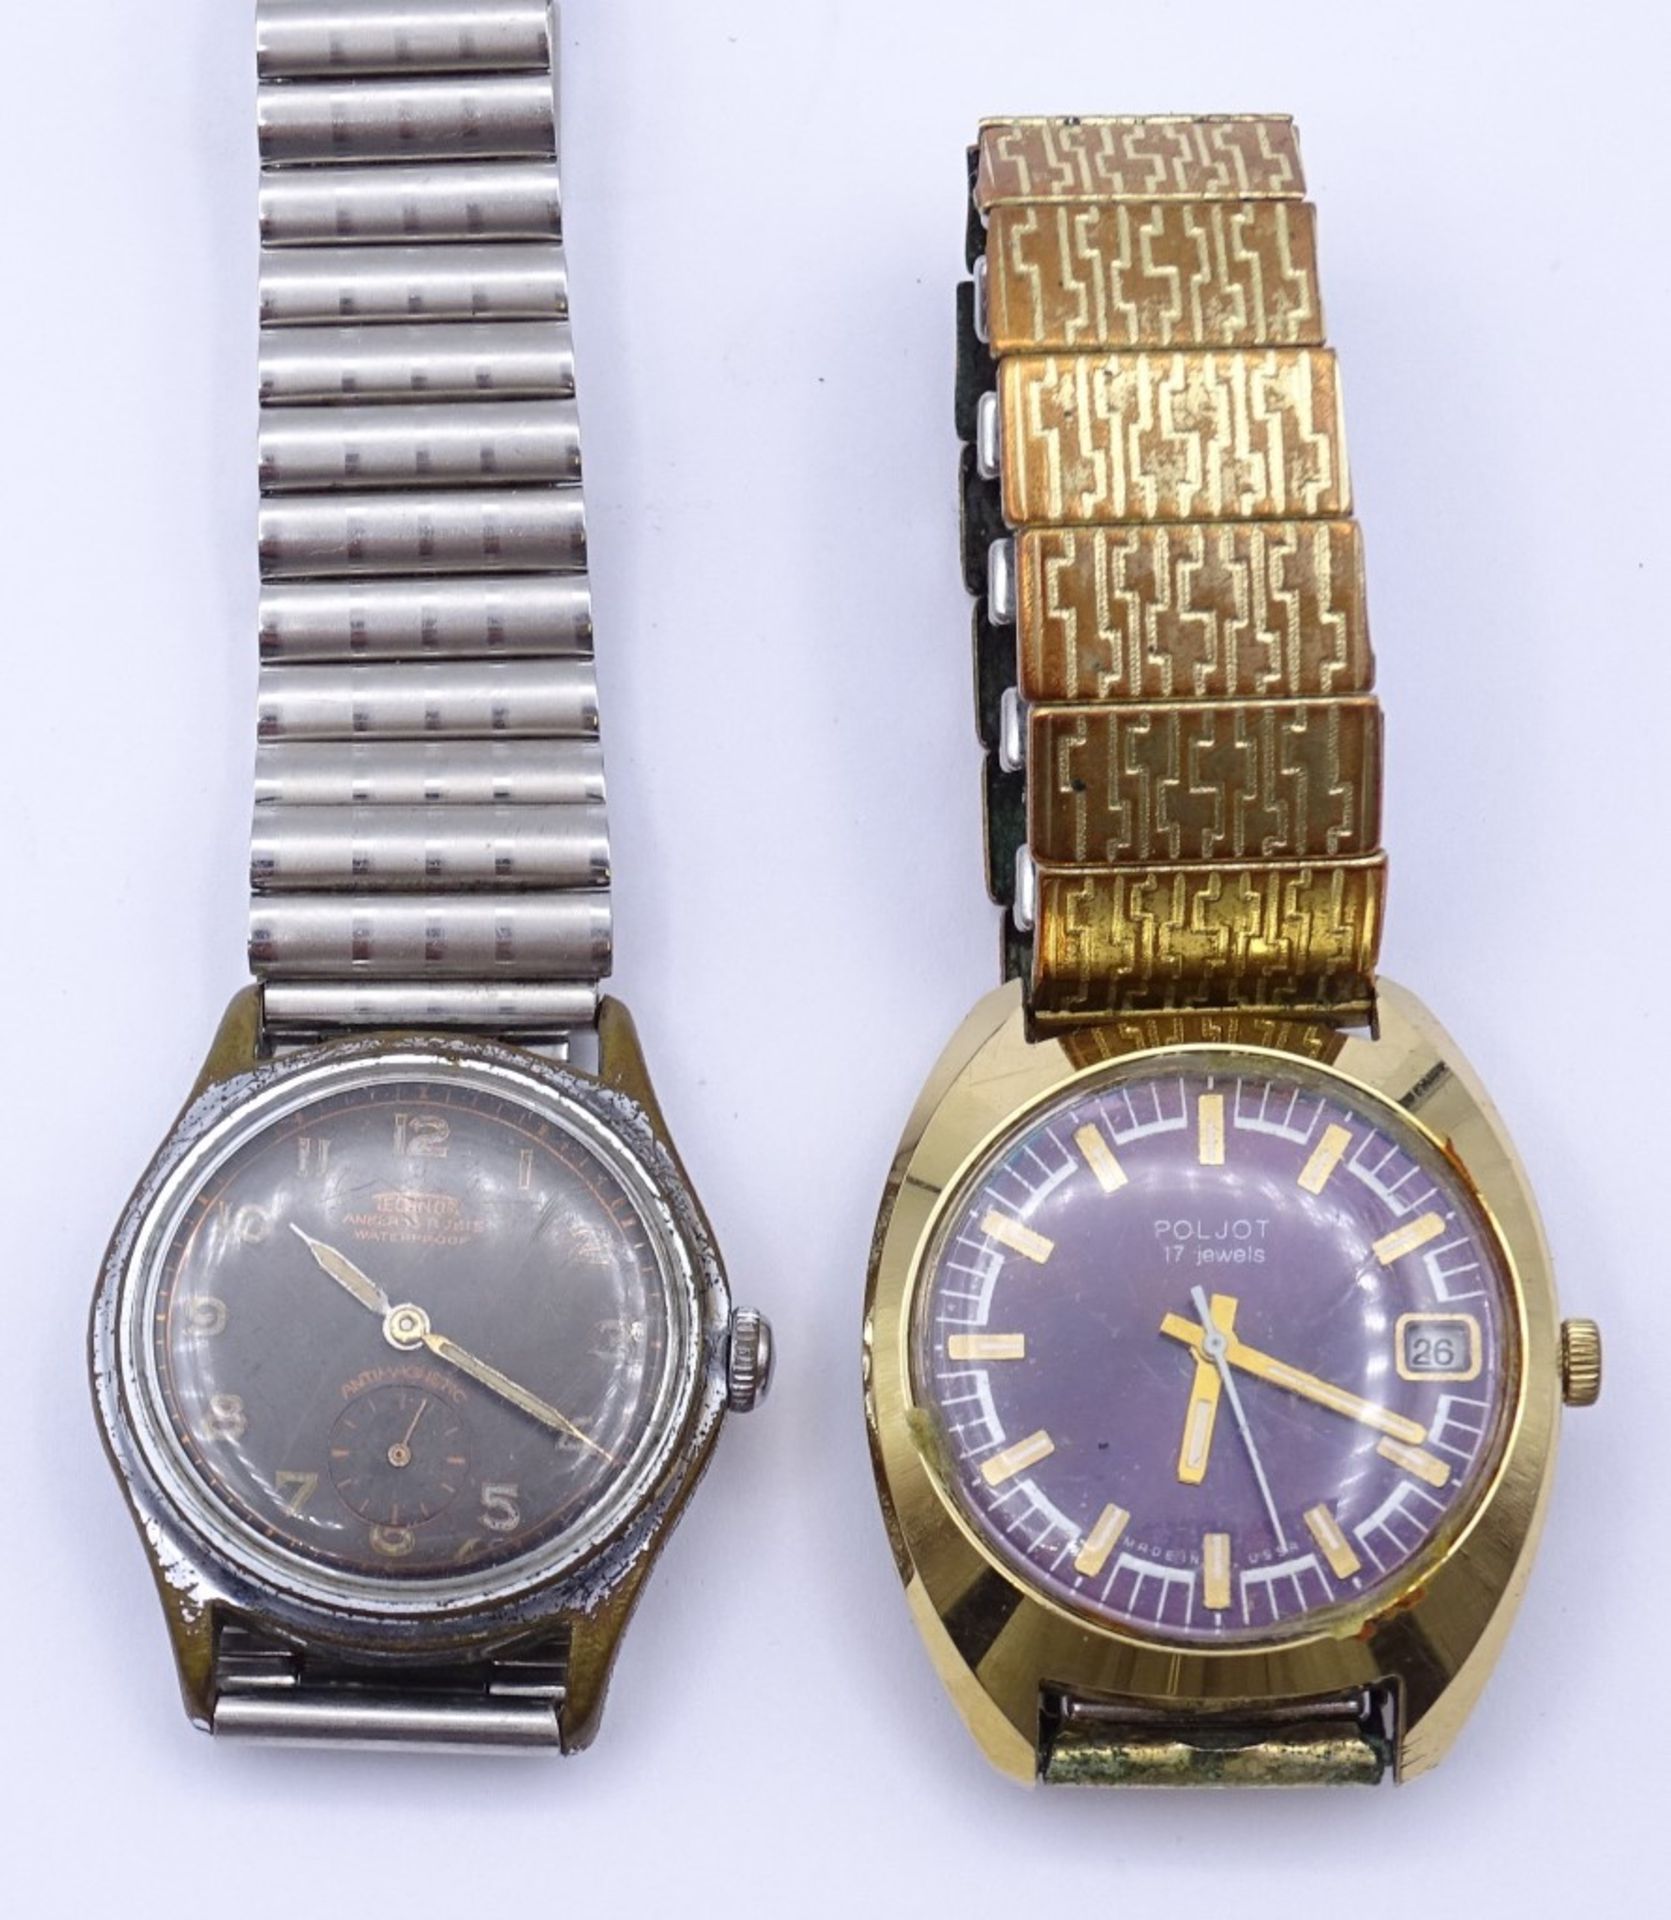 Zwei alte Armbanduhren,"Technor und Poljot",mechanisch,Poljot läuft,Technor steht,Alters-u.